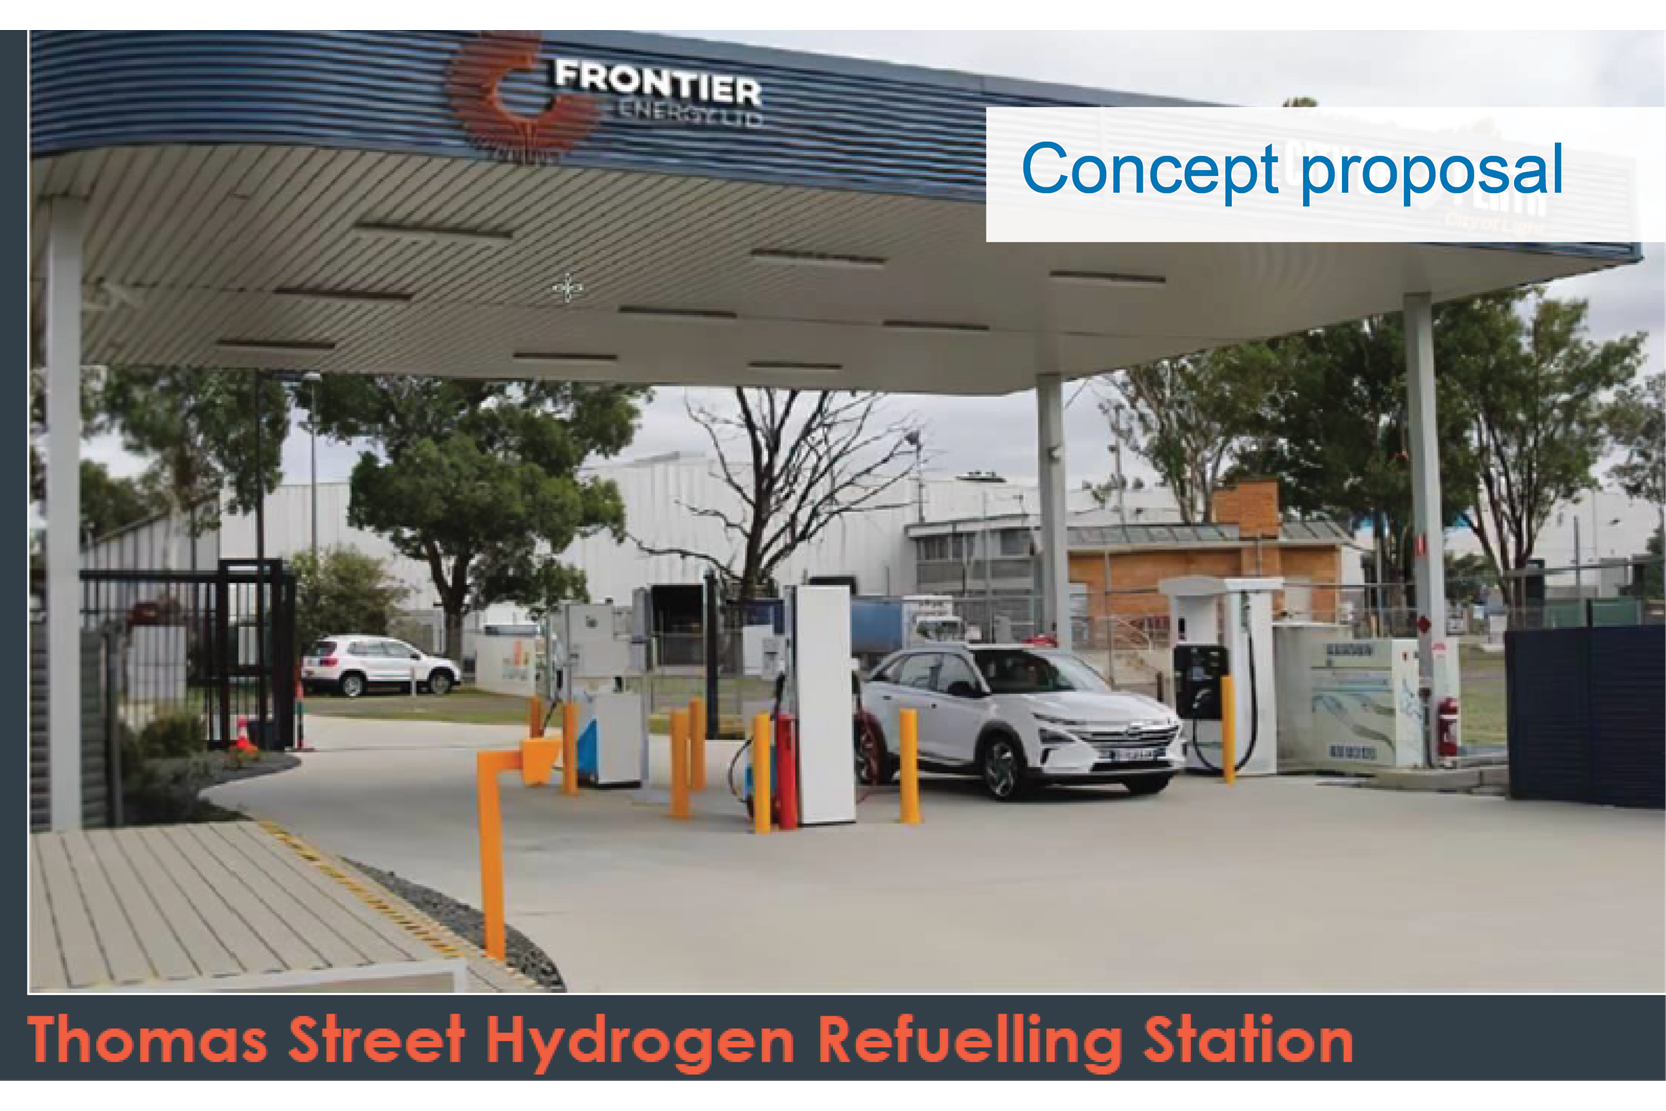 Western Australia’s first public hydrogen refuelling station 